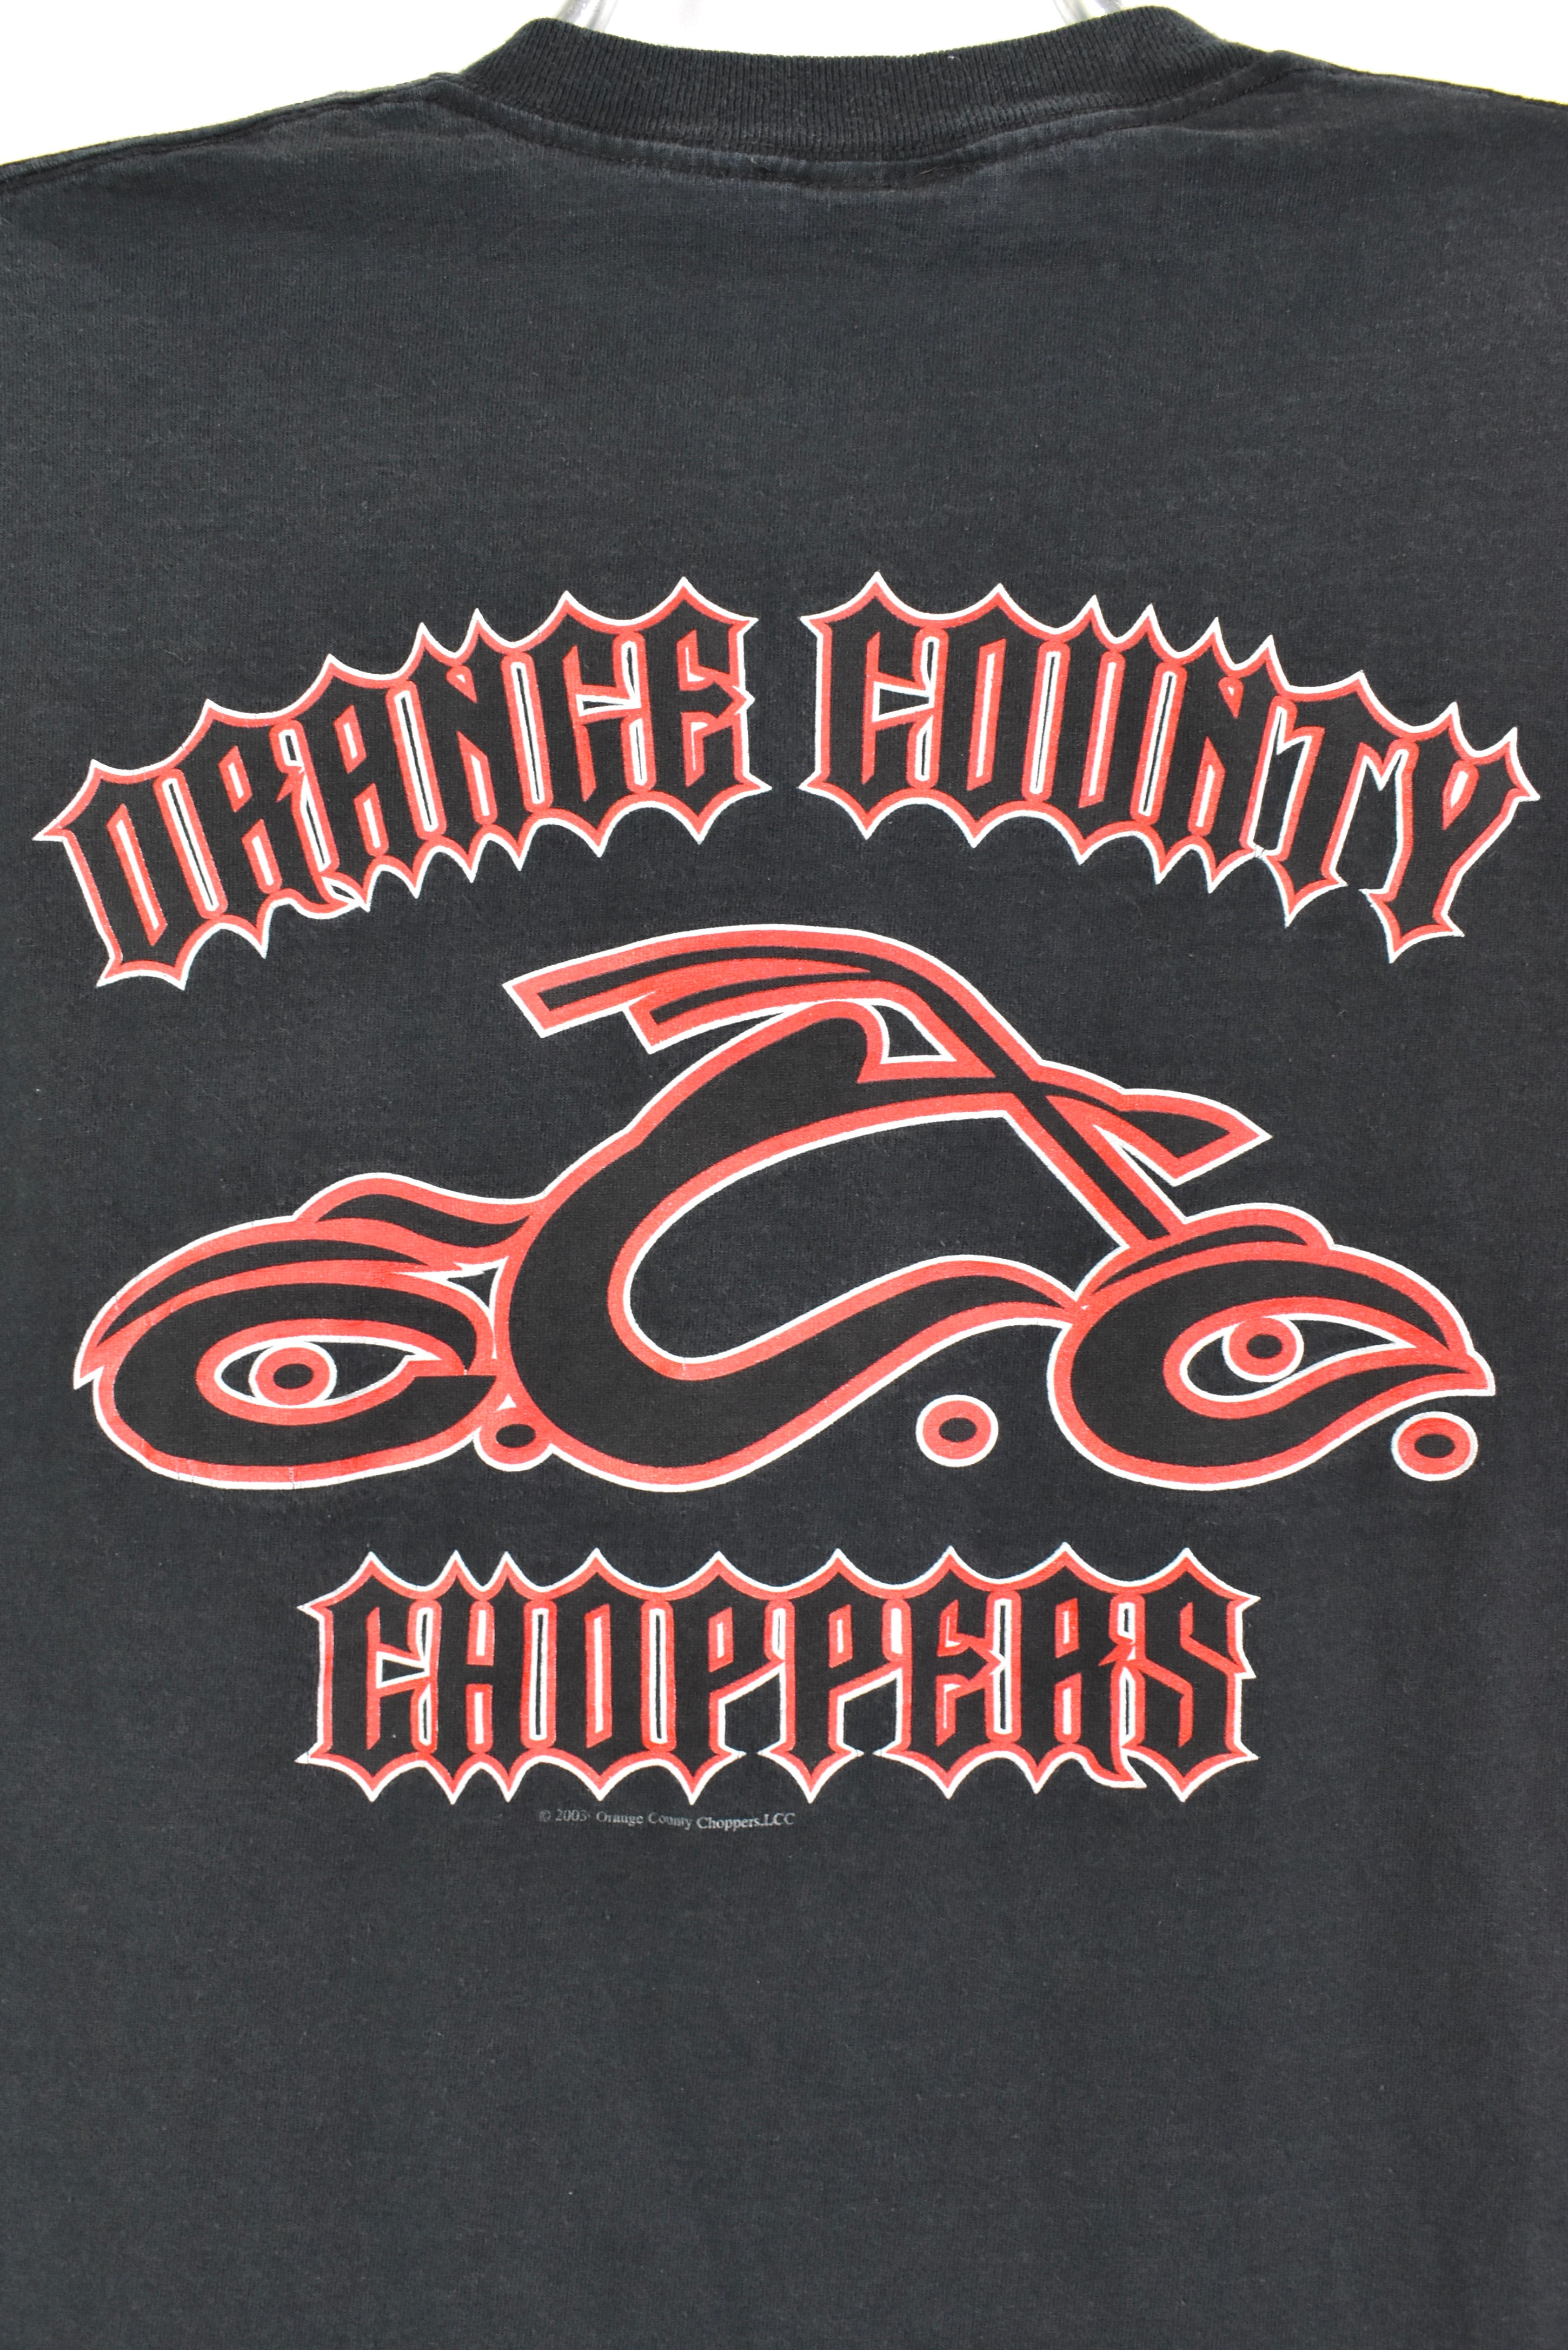 Vintage Orange County Choppers shirt, motorcycle biker long sleeve tee - small, black HARLEY DAVIDSON